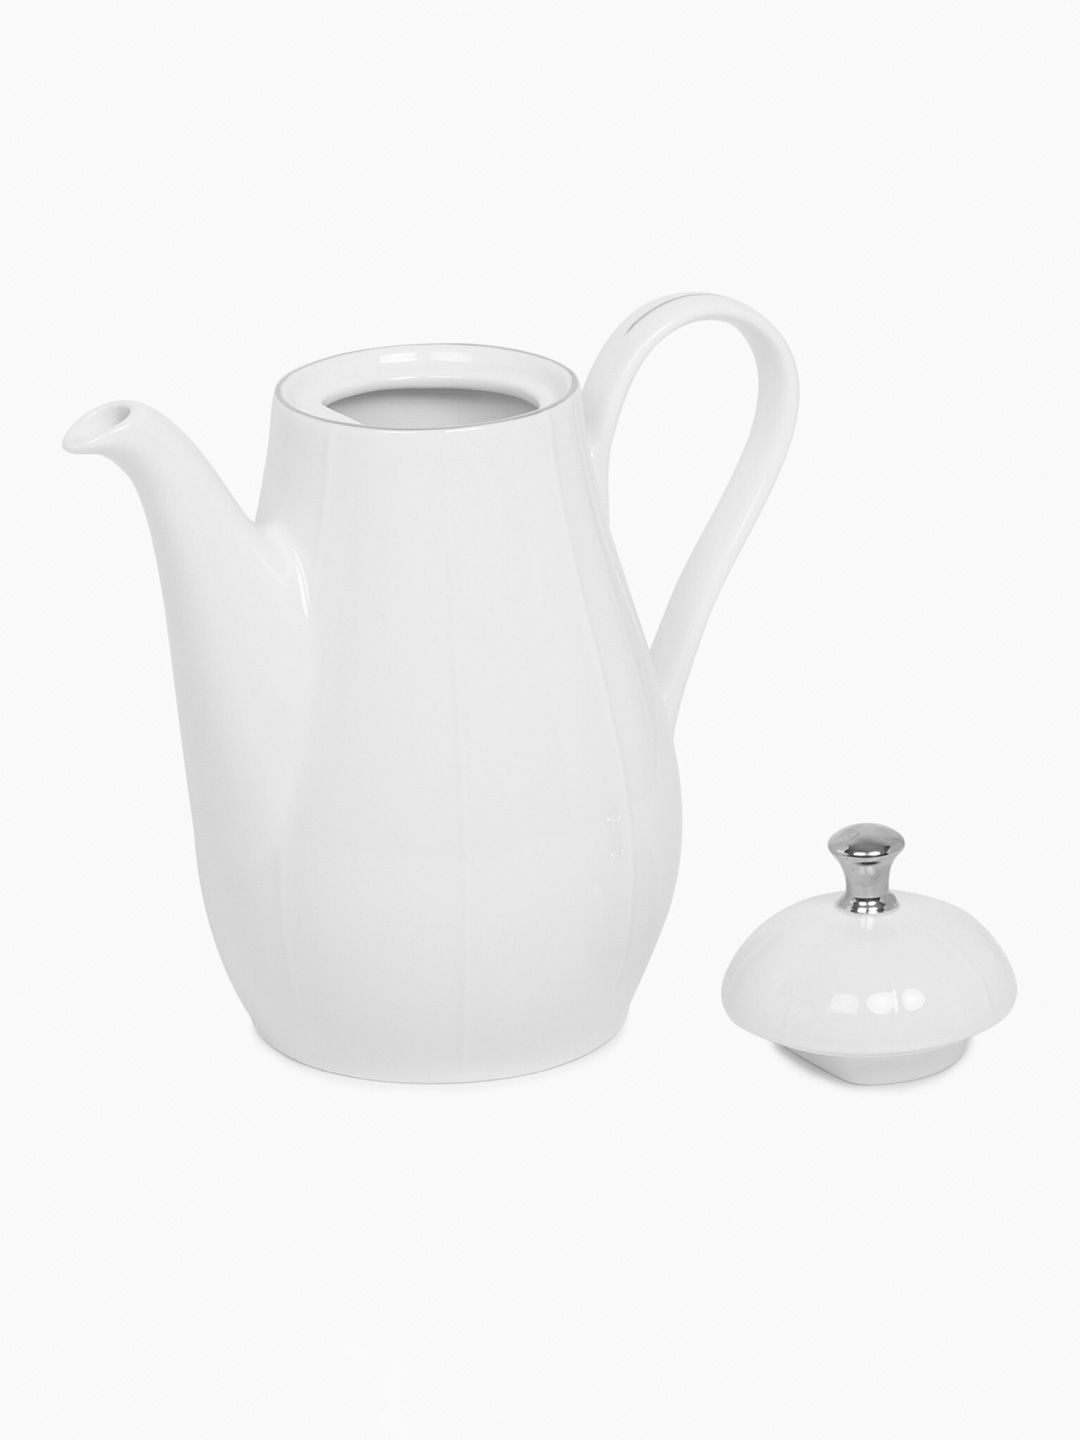 Home Centre White Solid Ceramic Tea Pot - 1100 ml Price in India